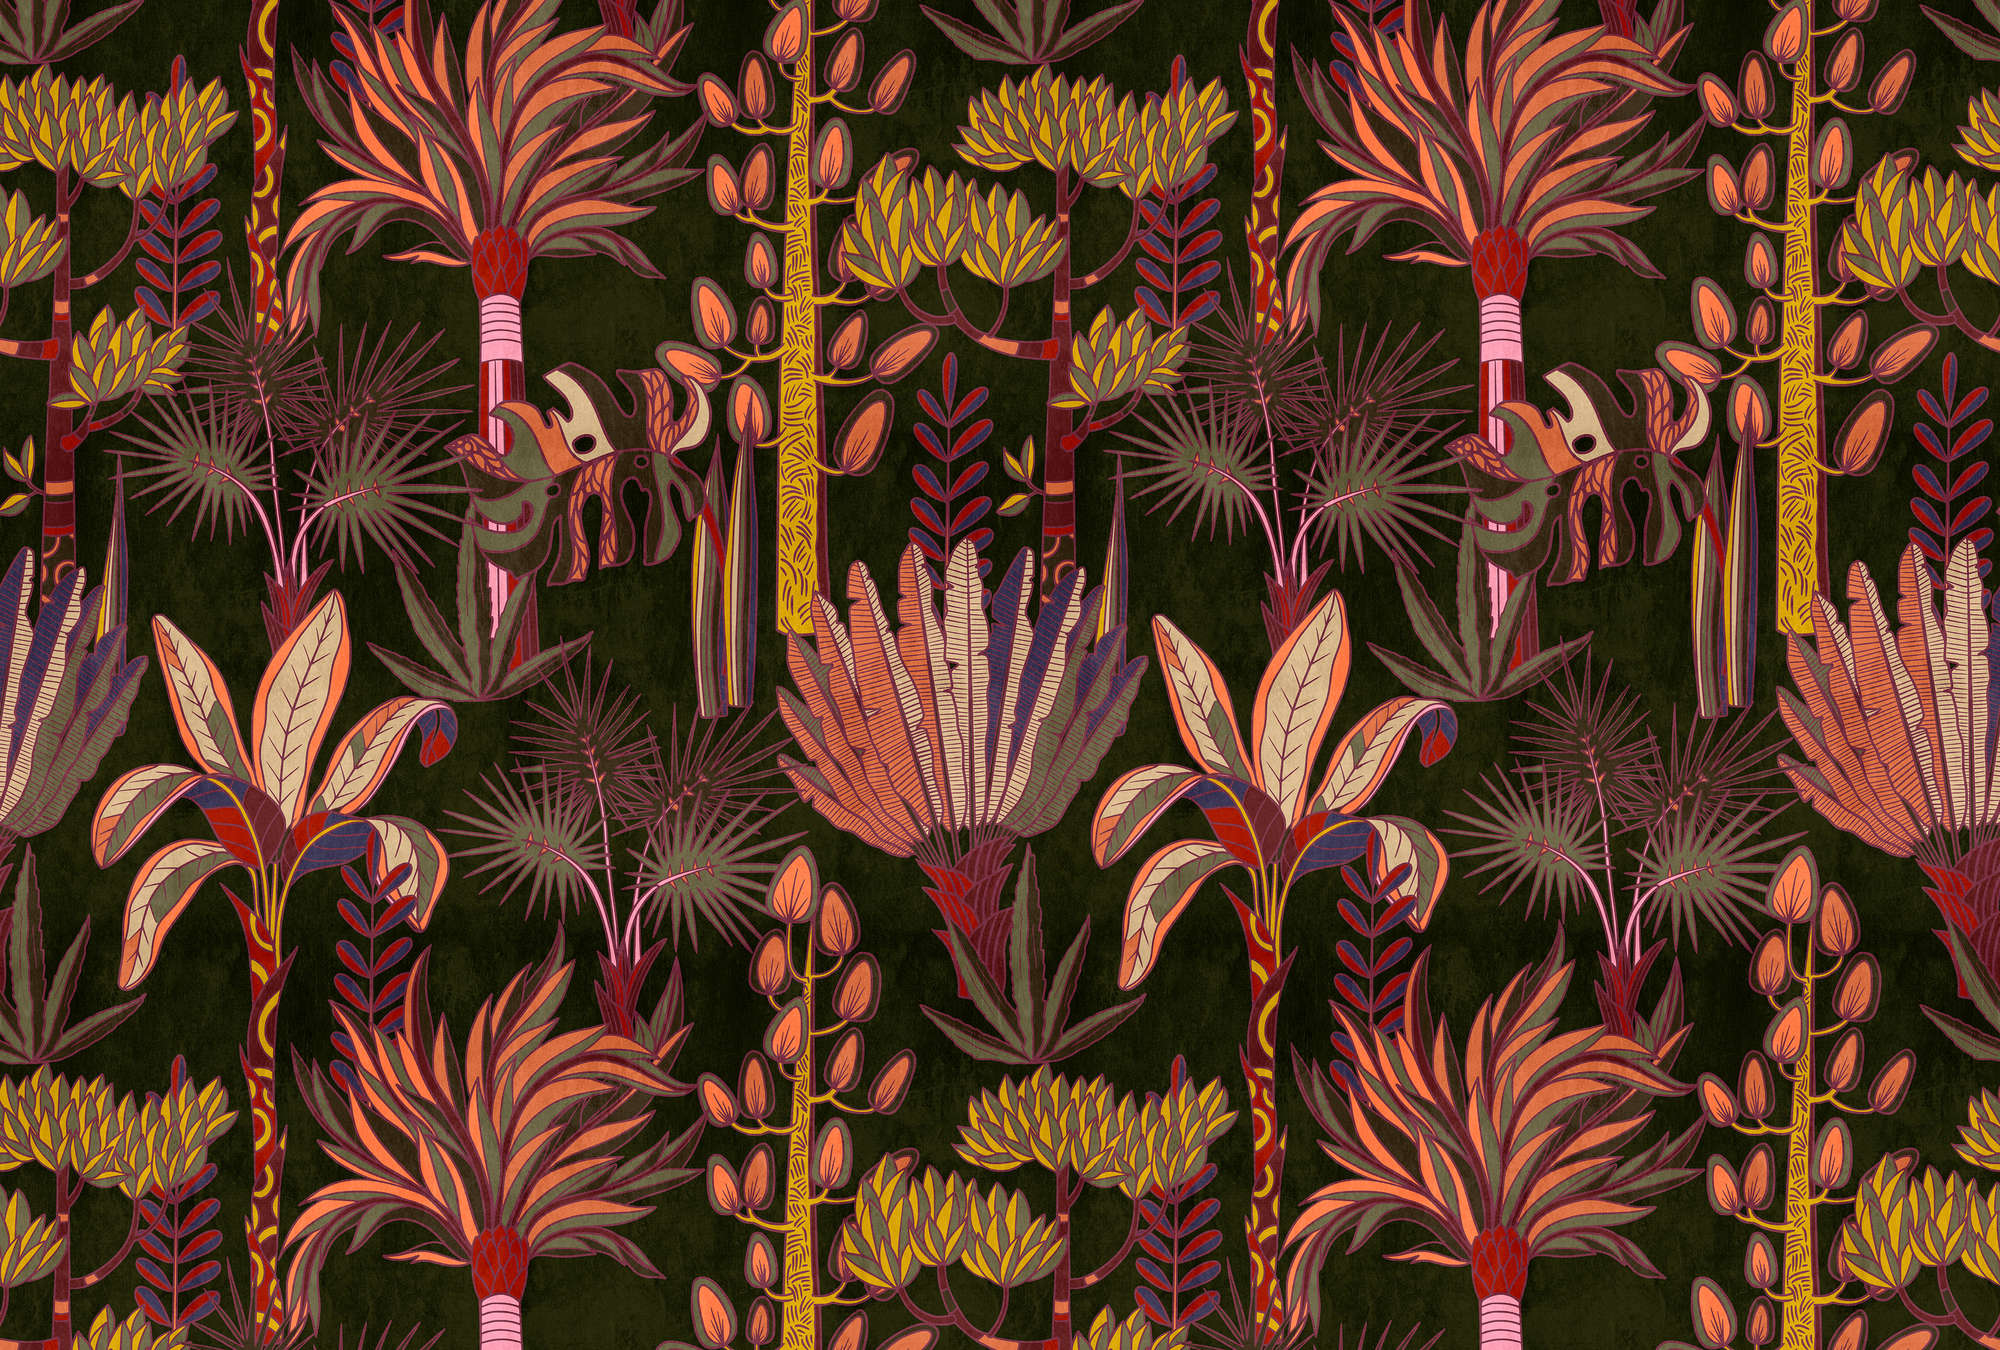             Lagos 1 – Palmen Fototapete bunter Grafik Stil im Textillook
        